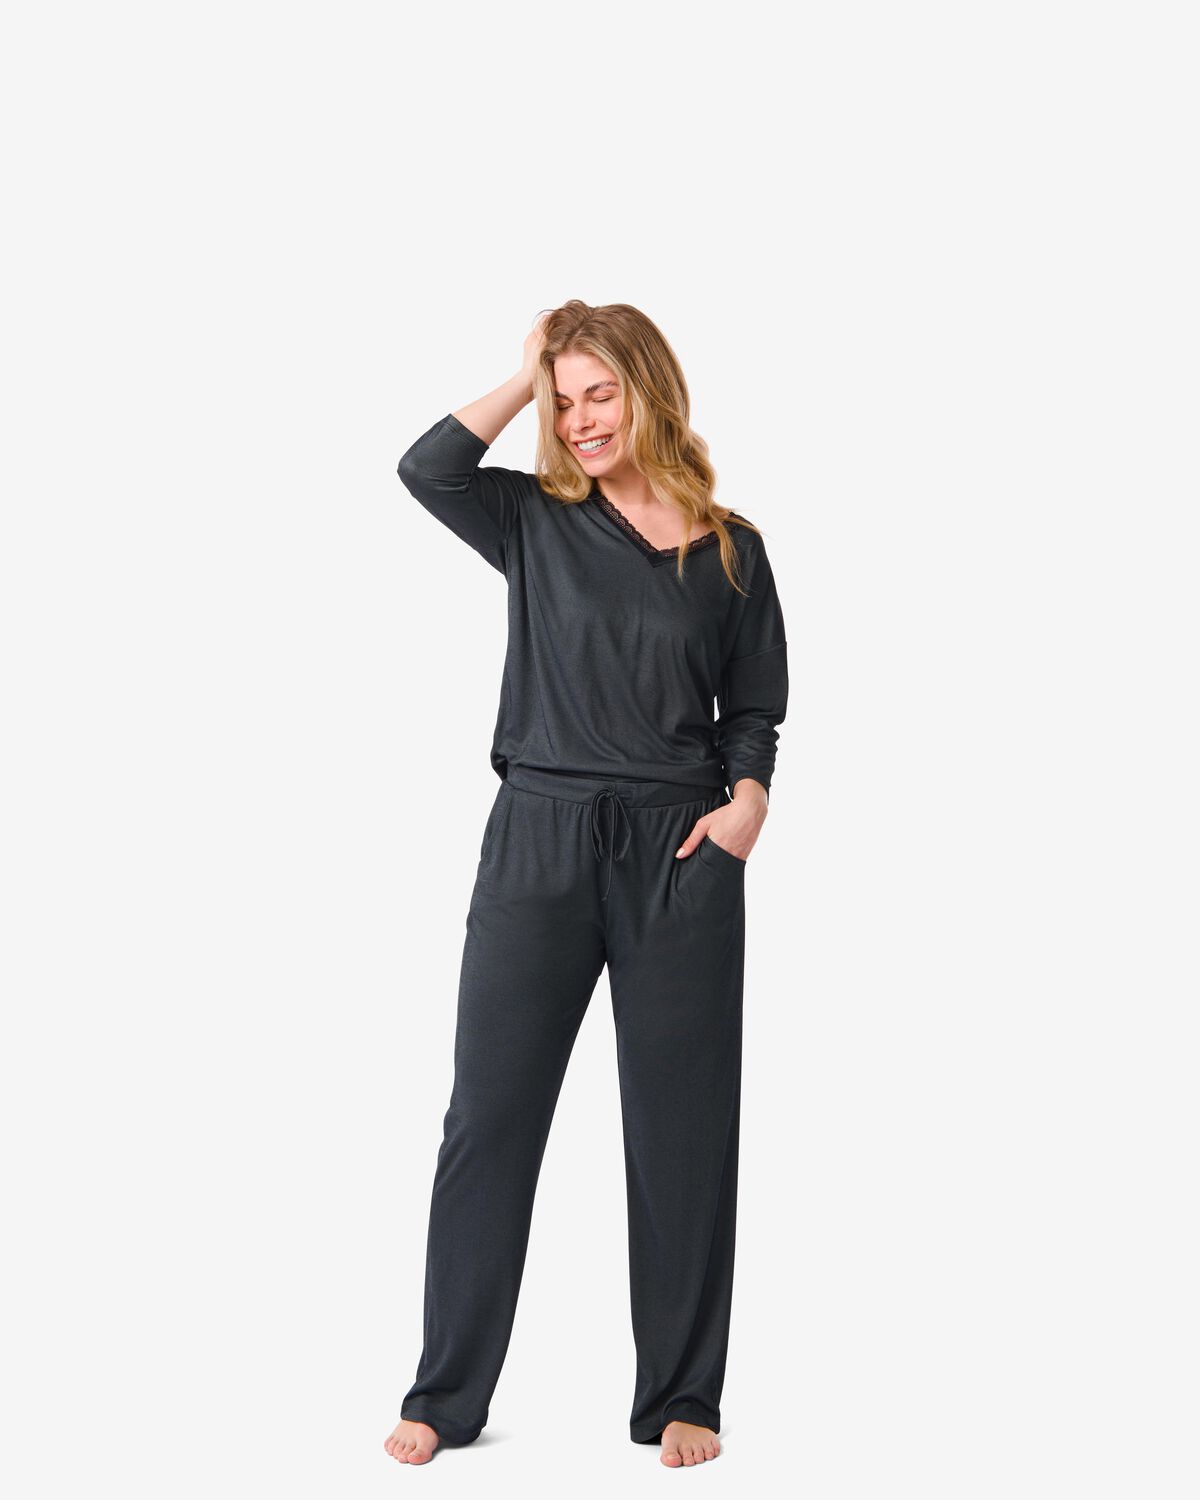 Damen-Pyjamaset mit Viskose, schwarz - 200169 - HEMA